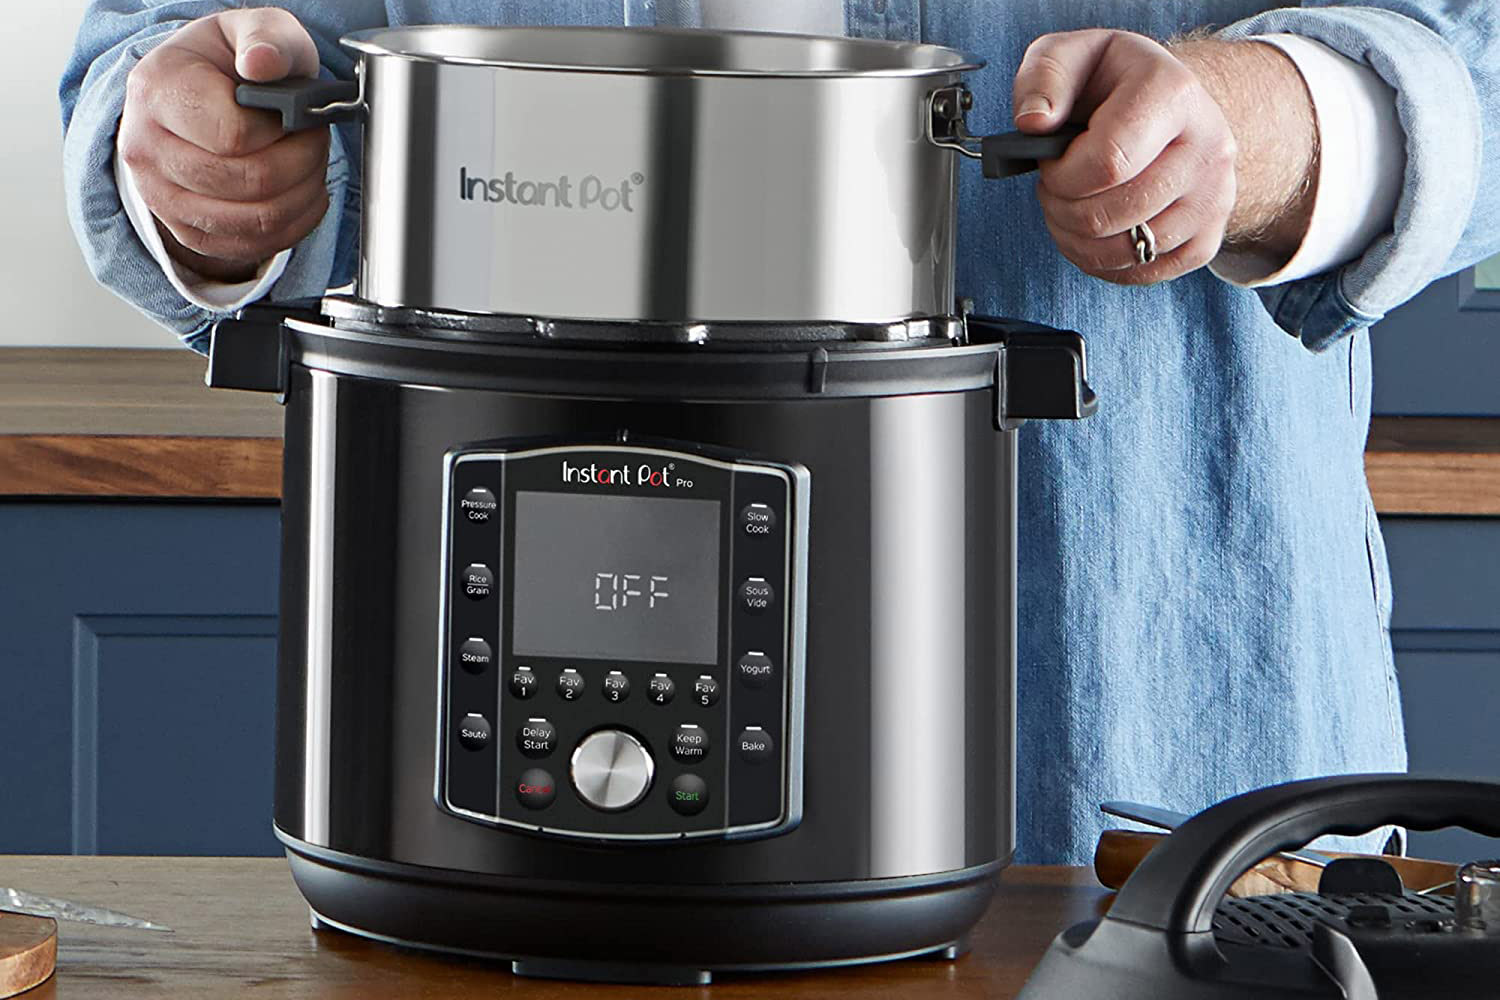 Prime Day Deal: Instant Pot Ultra 3 Qt 10-in-1 Multi Pressure Cooker